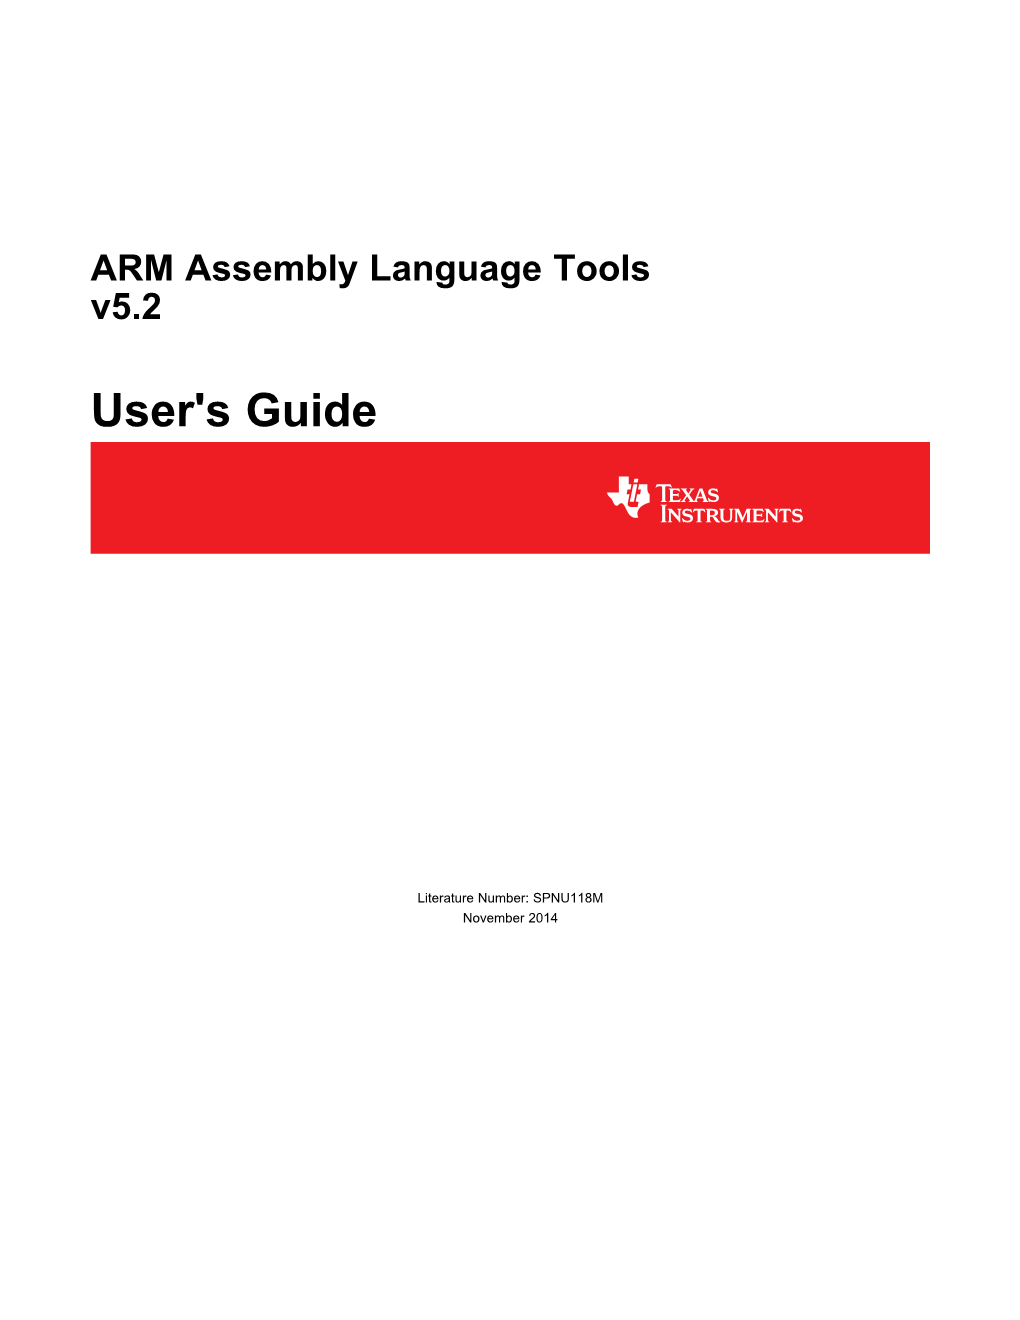 ARM Assembly Language Tools V5.2